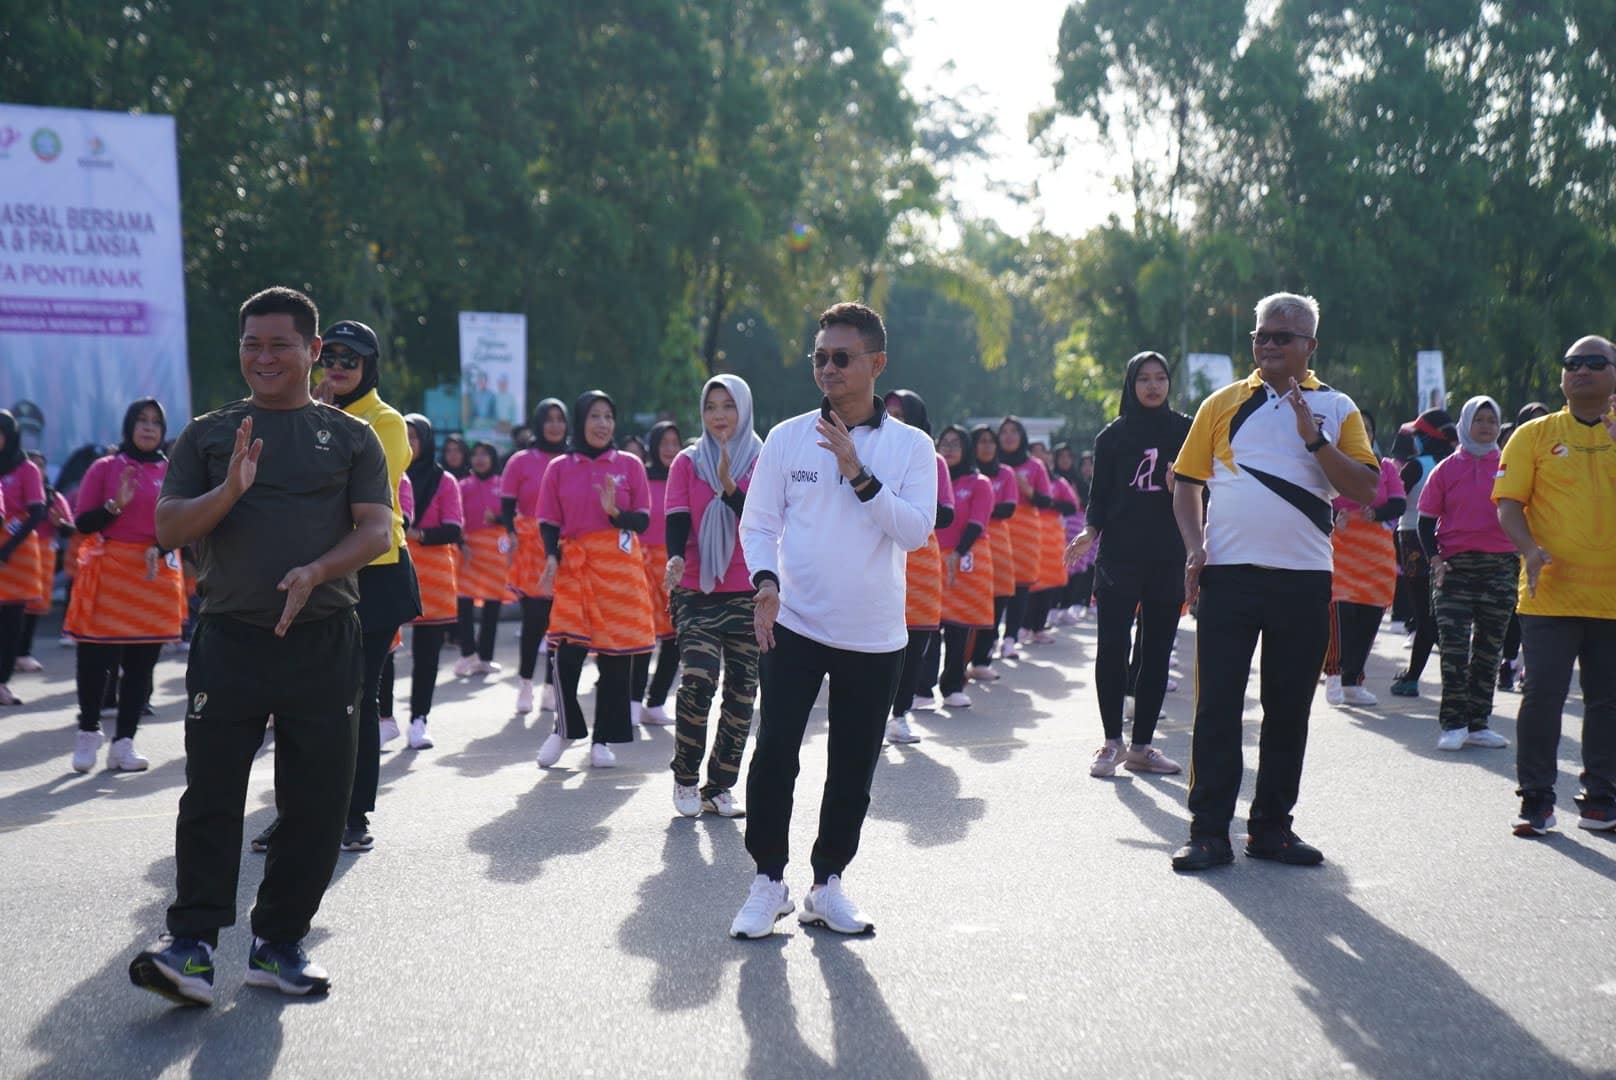 Wali Kota Pontianak, Edi Rusdi Kamtono berbaur bersama masyarakat mengikuti senam massal dalam rangka peringatan Haornas tahun 2022 di Kota Pontianak. (Foto: Prokopim For KalbarOnline.com)